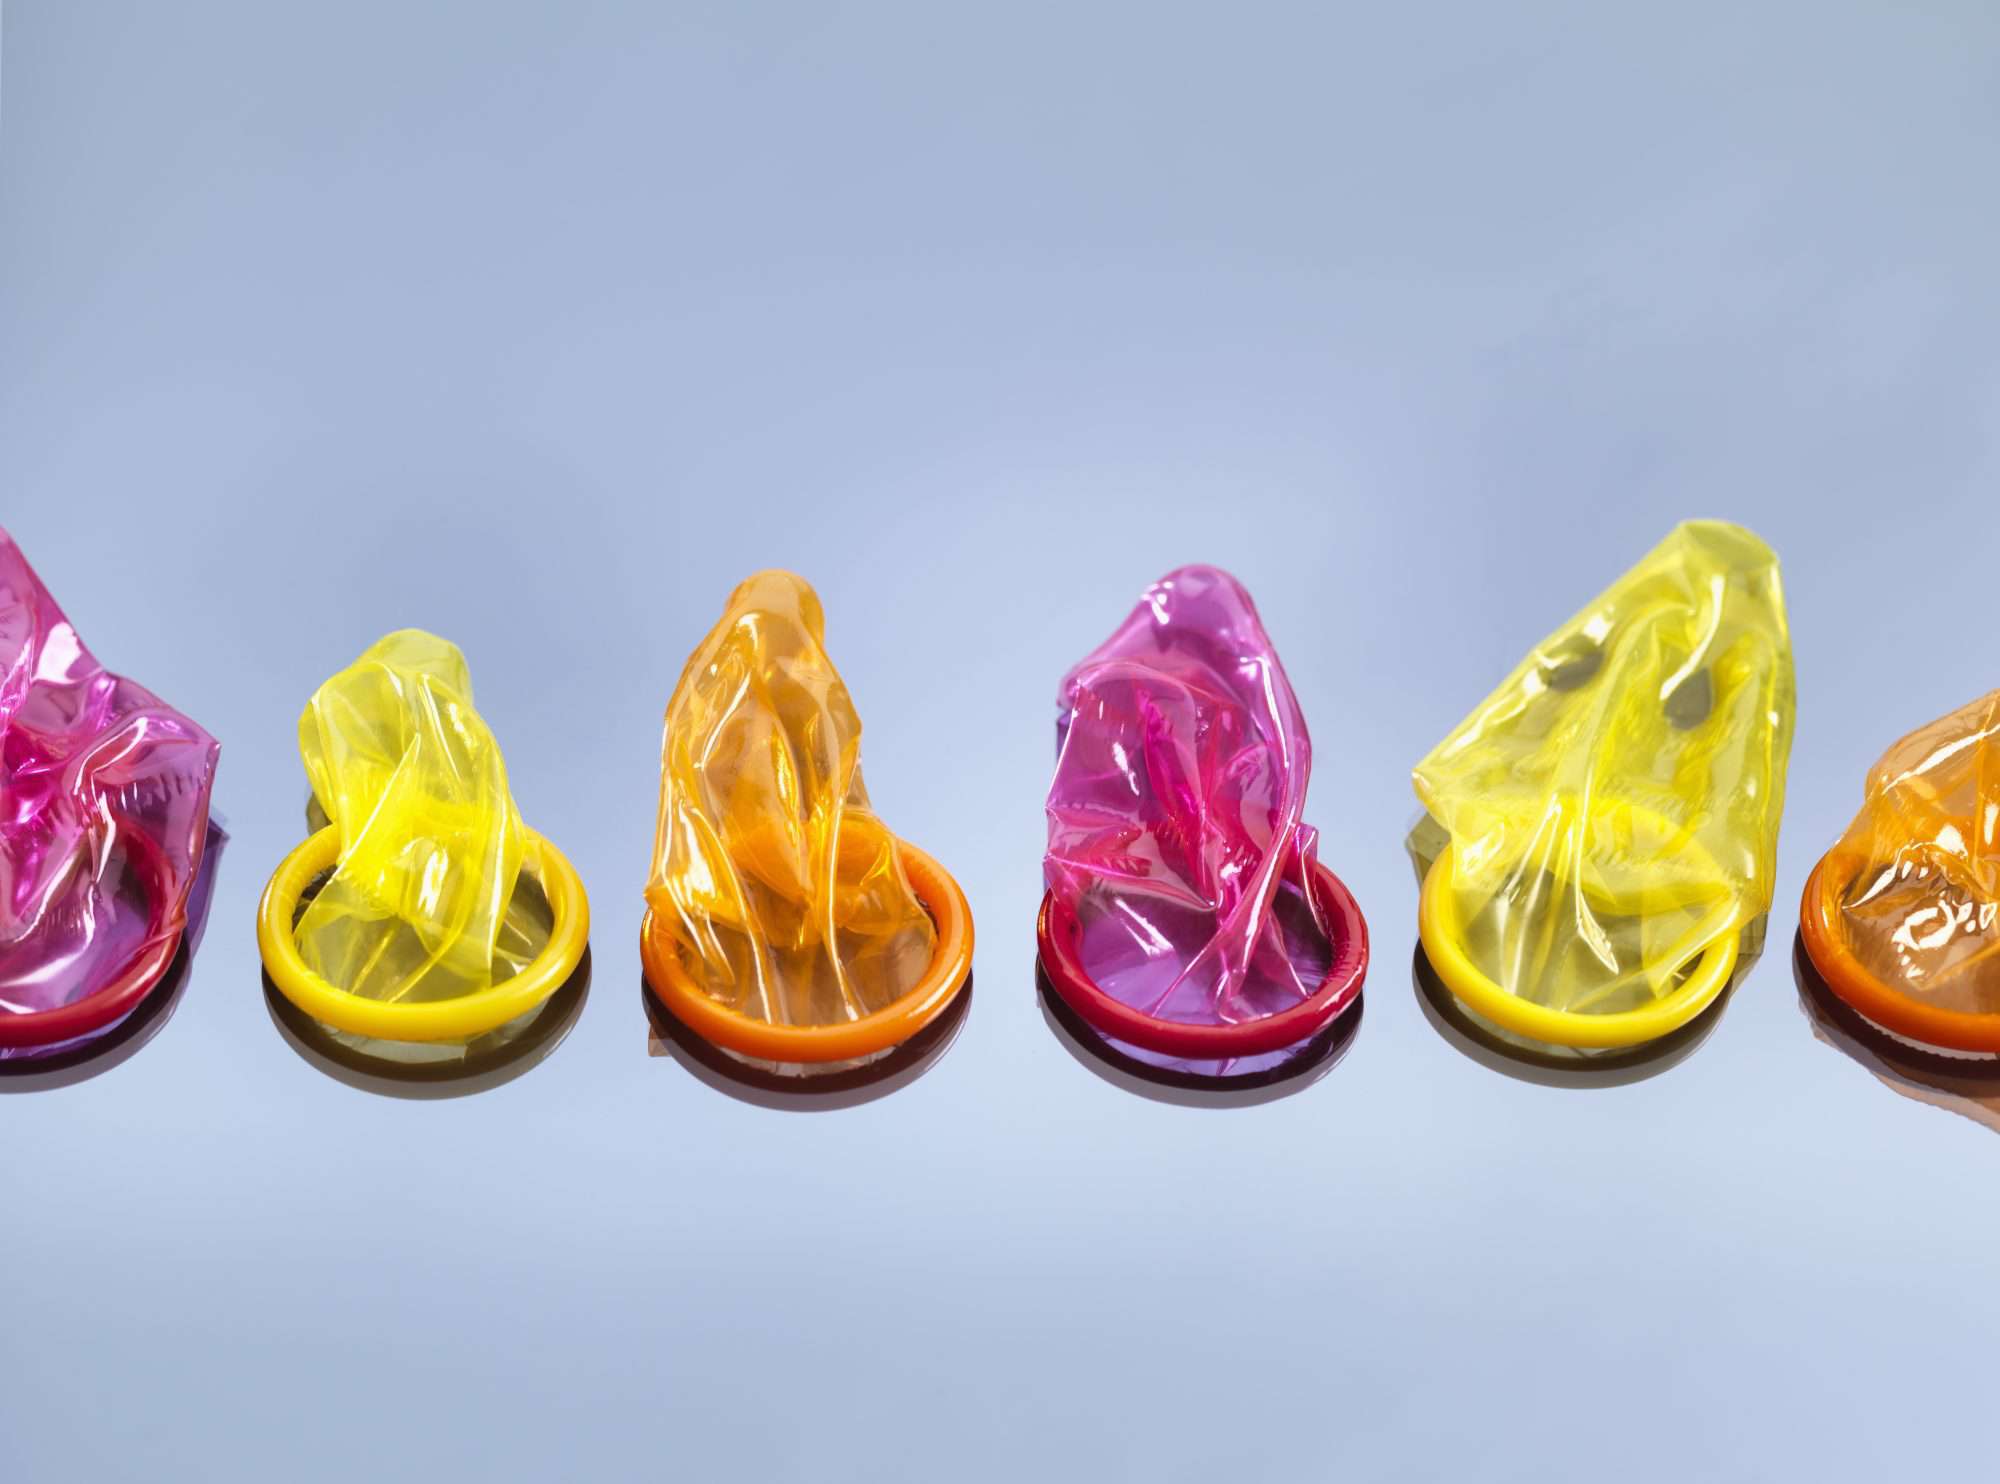 bethany kolb recommends condom falls off inside pic